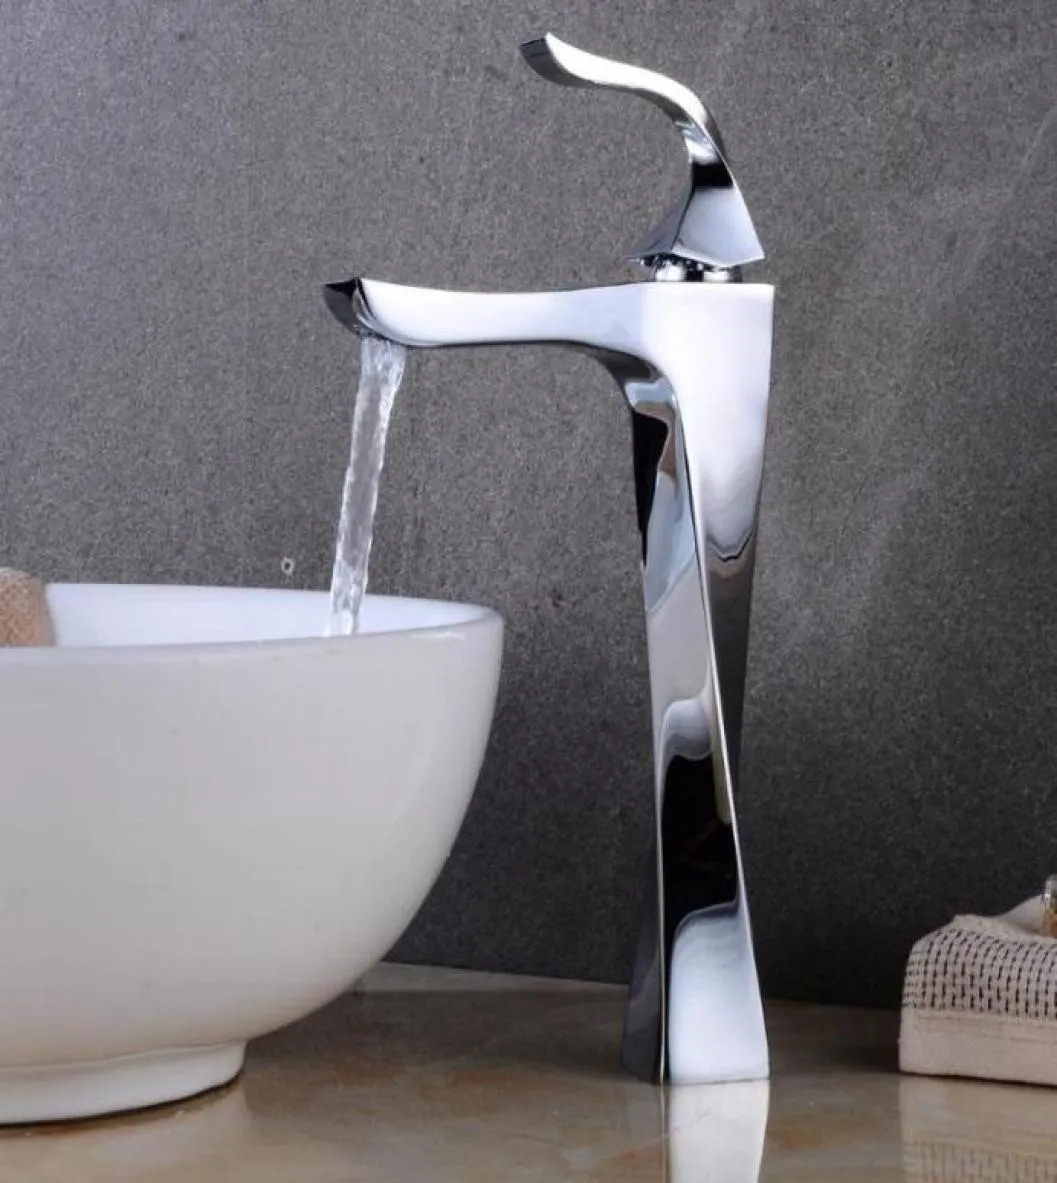 OUYASHI bathroom basin faucet water tap deck mounted single handle mixer tap sinktap modern countertop9437482